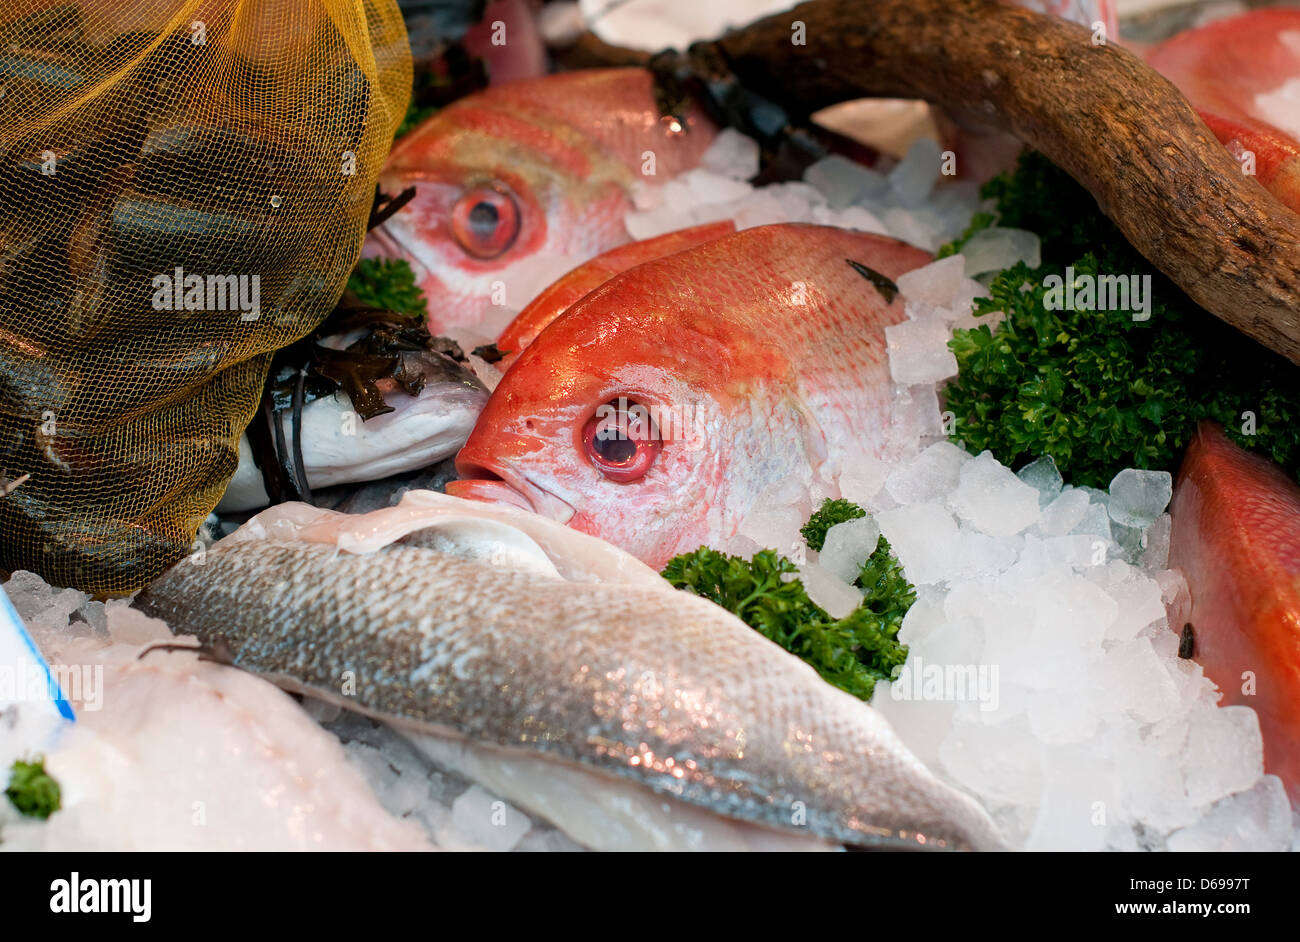 selection of fish on fishmonger's display counter Stock Photo